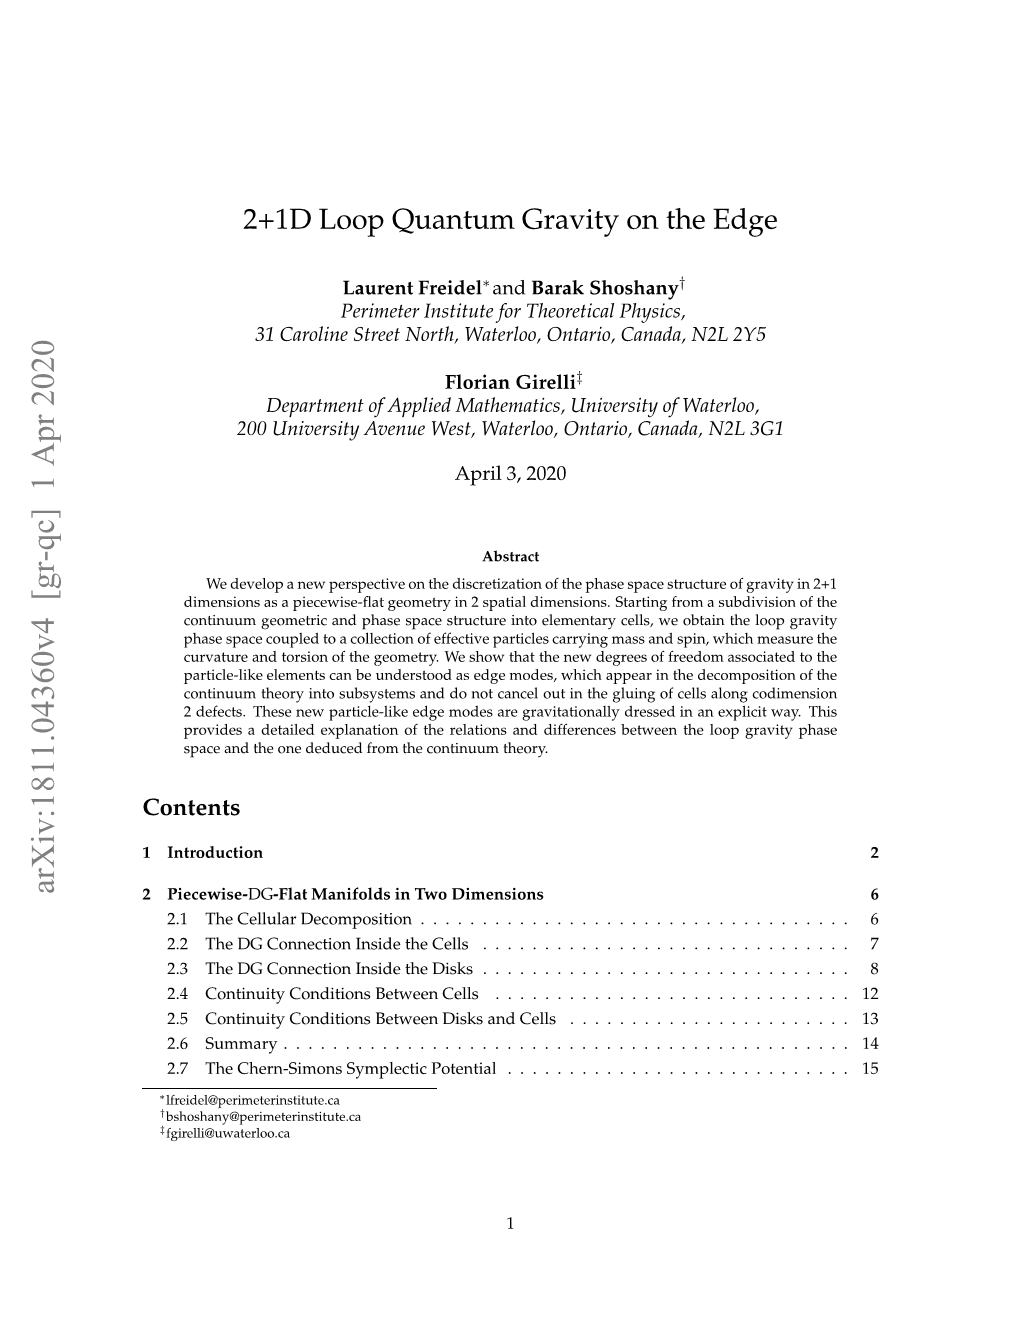 2+1D Loop Quantum Gravity on the Edge,” Phys